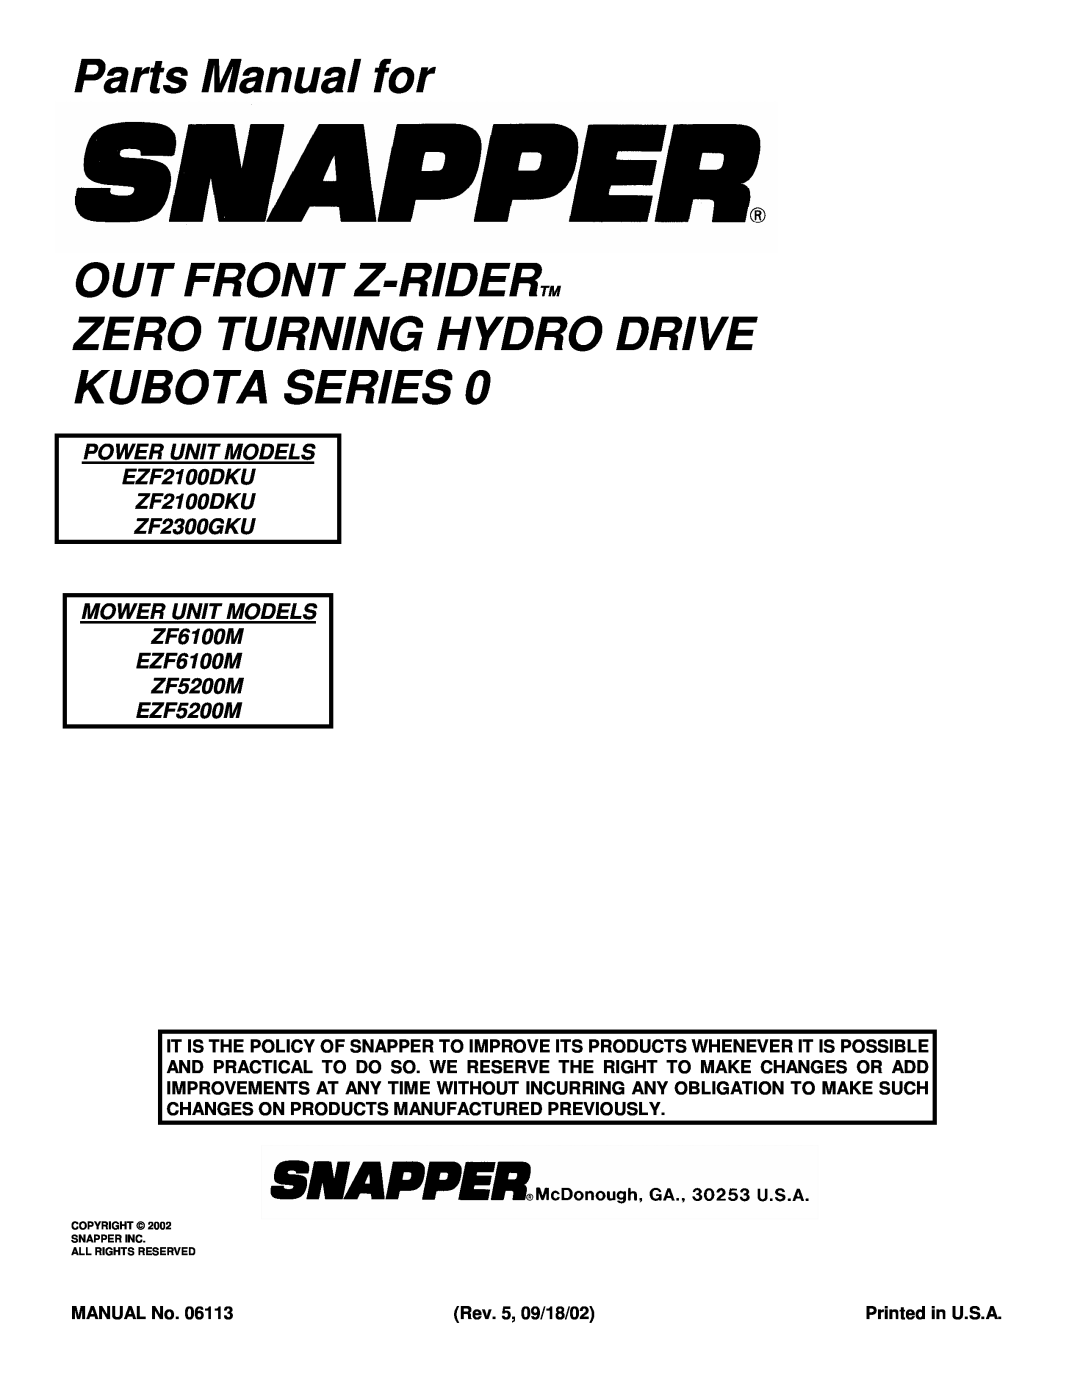 Snapper EZF2100DKU, EZF6100M manual Parts Manual for OUT FRONT Z-RIDERTM, Zero Turning Hydro Drive Kubota Series, EZF5200M 